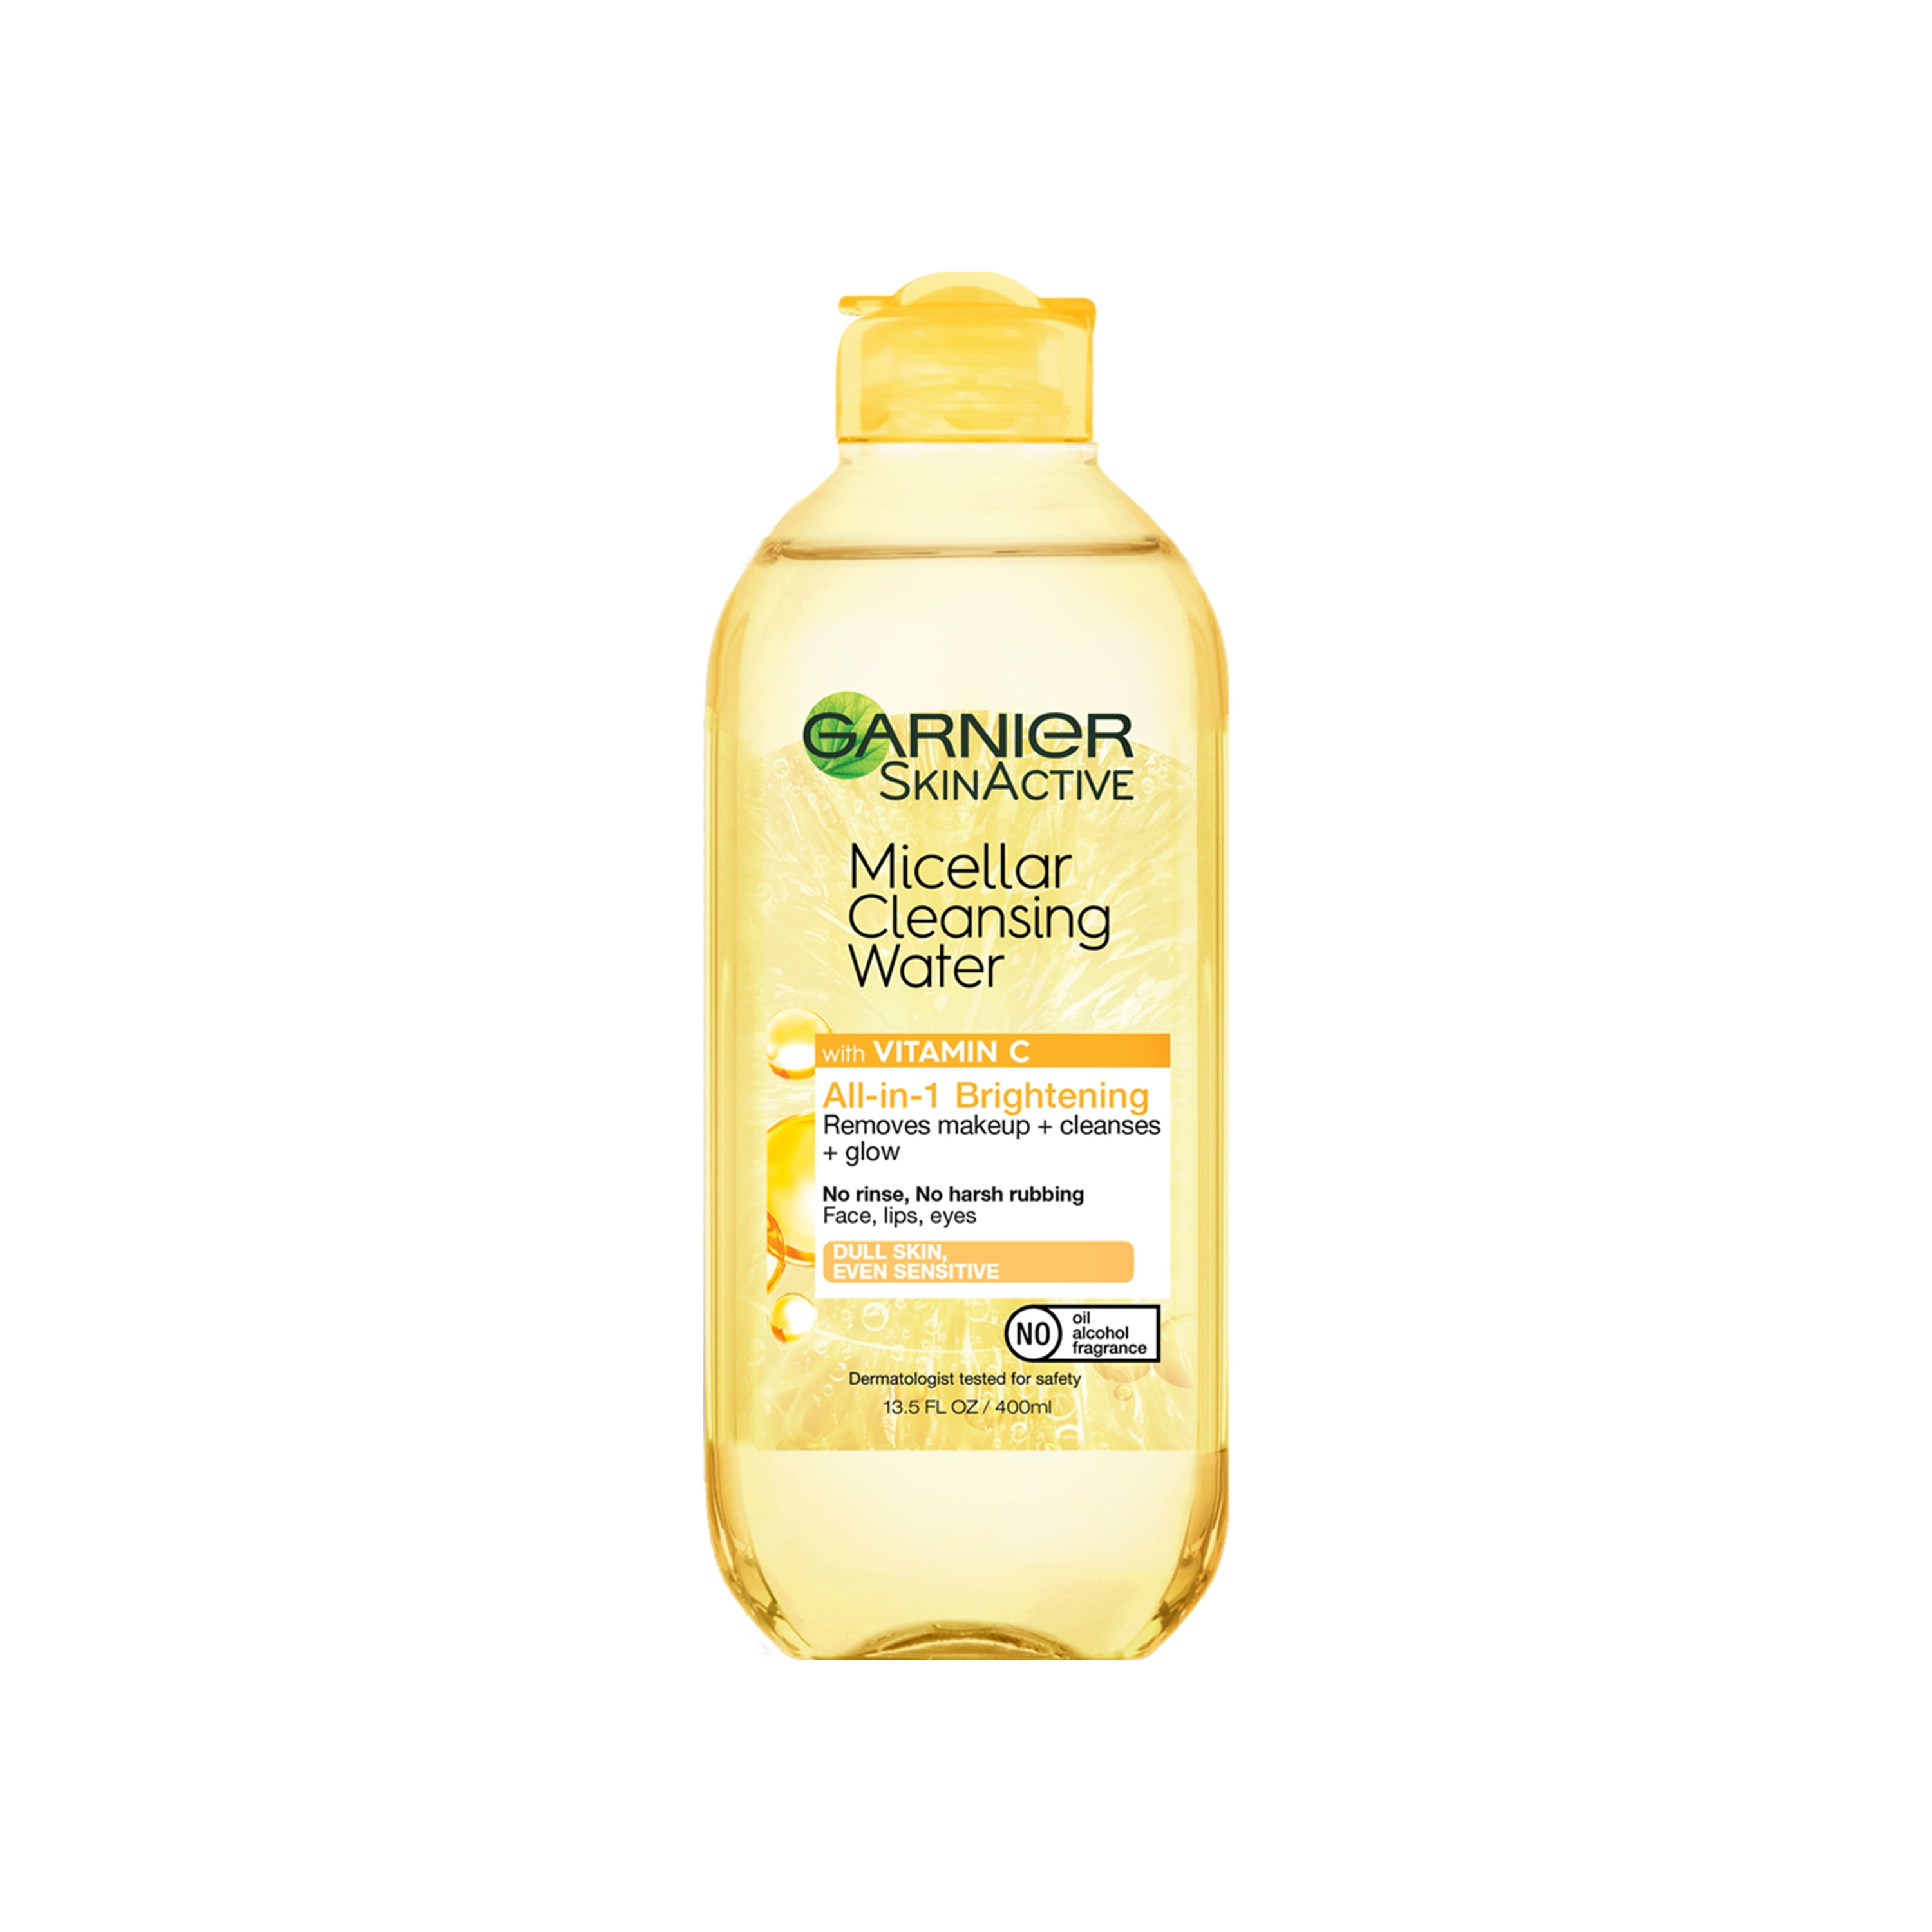 Garnier SkinActive Micellar Cleansing Water All in 1 Brightening with Vitamin C, 13.5 fl oz